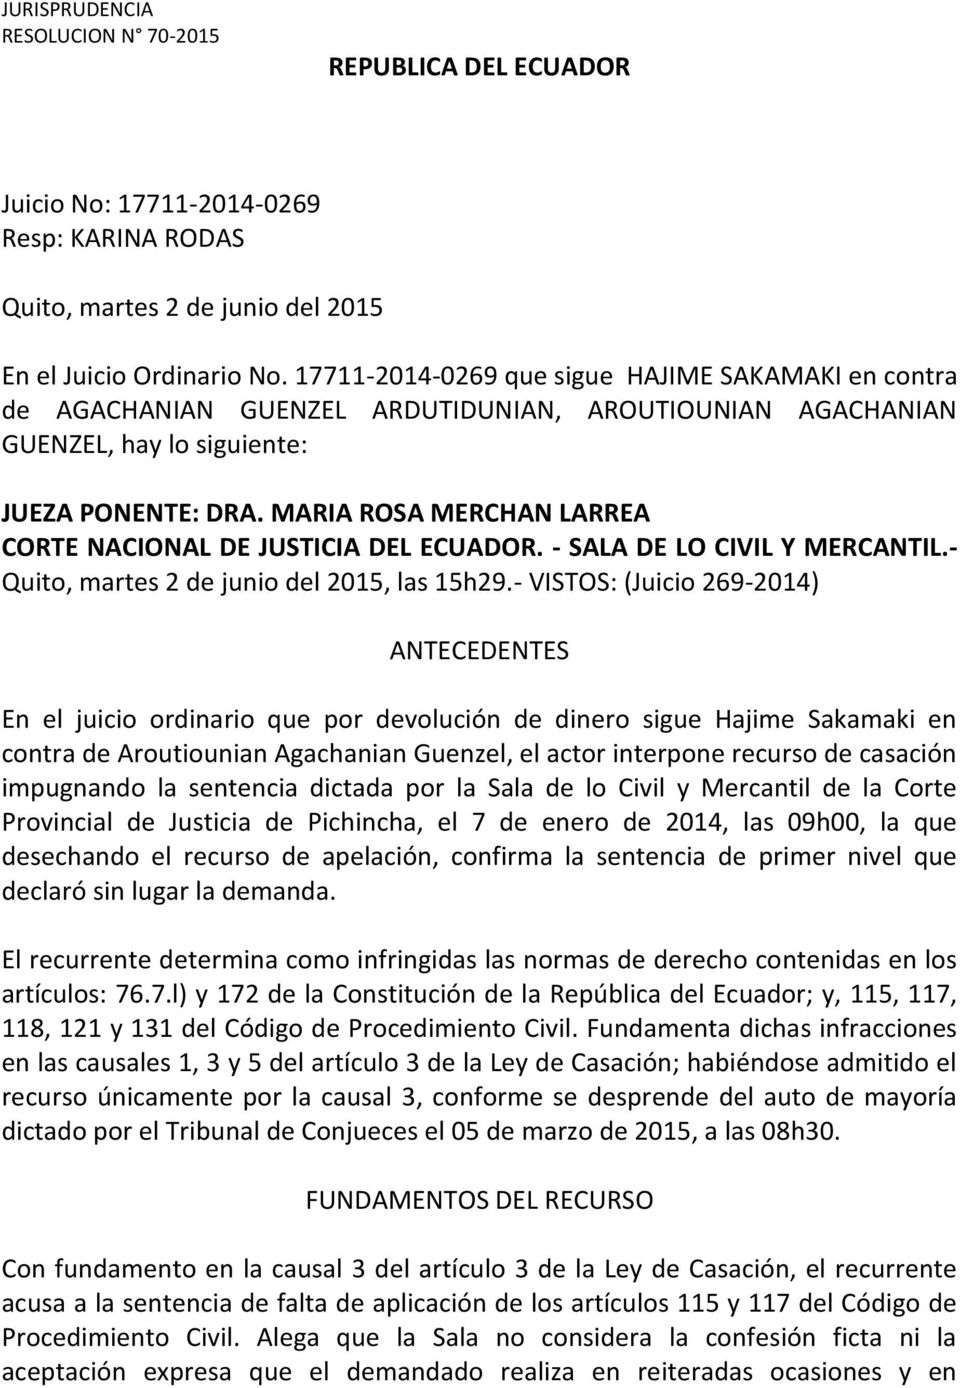 MARIA ROSA MERCHAN LARREA CORTE NACIONAL DE JUSTICIA DEL ECUADOR. - SALA DE LO CIVIL Y MERCANTIL.- Quito, martes 2 de junio del 2015, las 15h29.